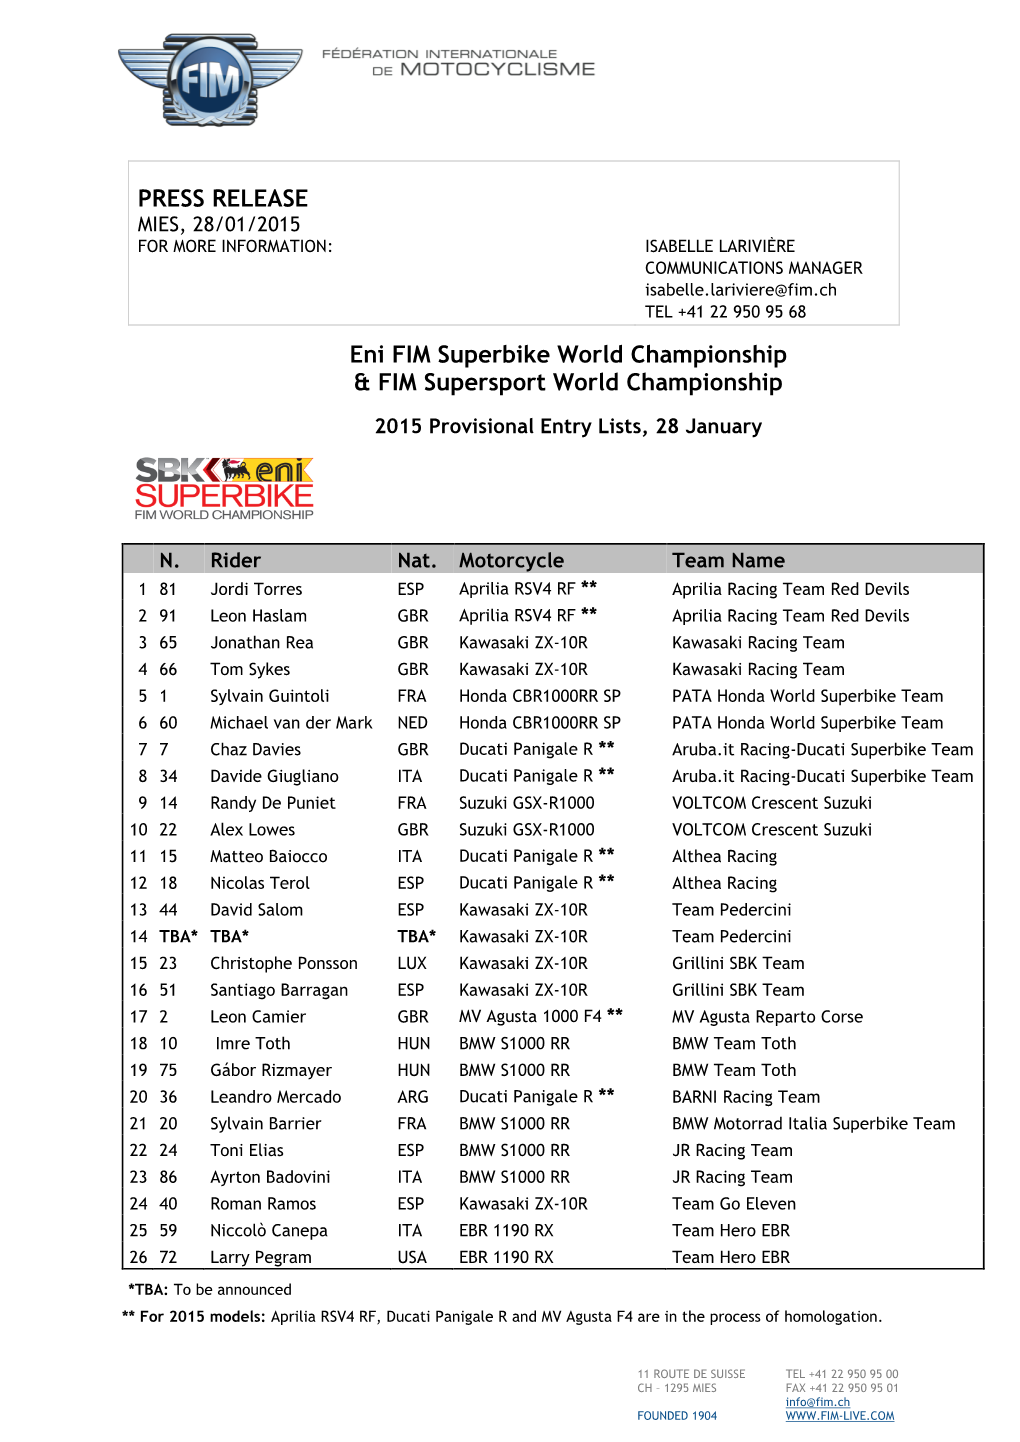 PRESS RELEASE Eni FIM Superbike World Championship & FIM Supersport World Championship